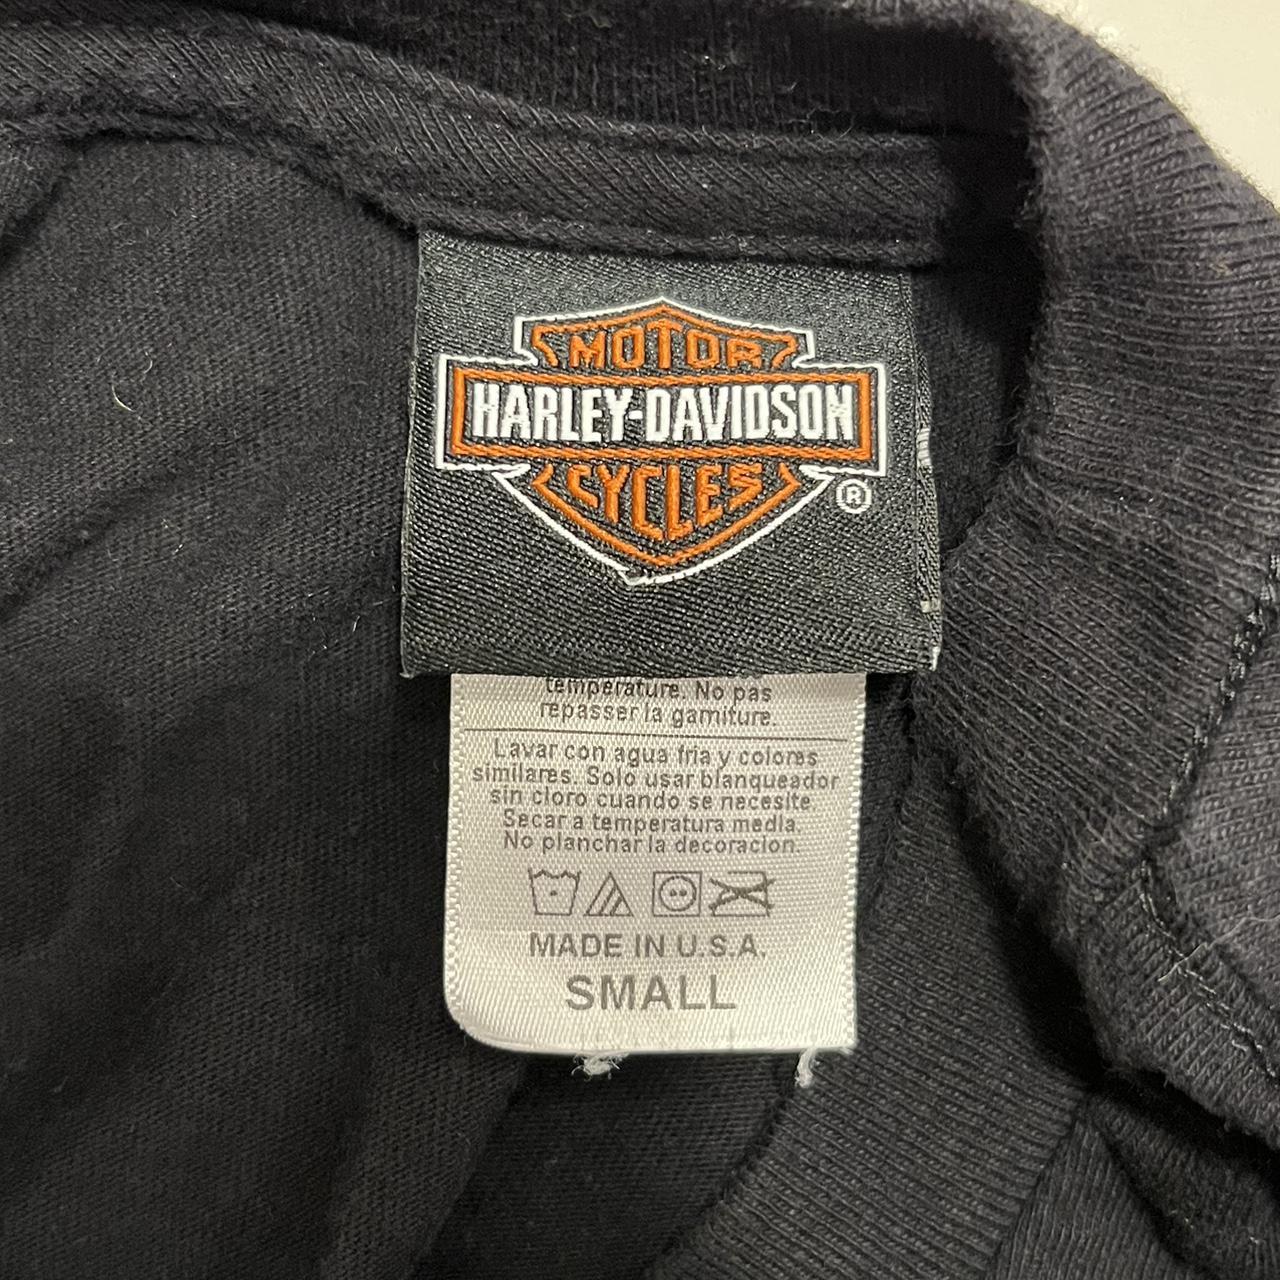 Harley Davidson Men's Black and Grey T-shirt (4)